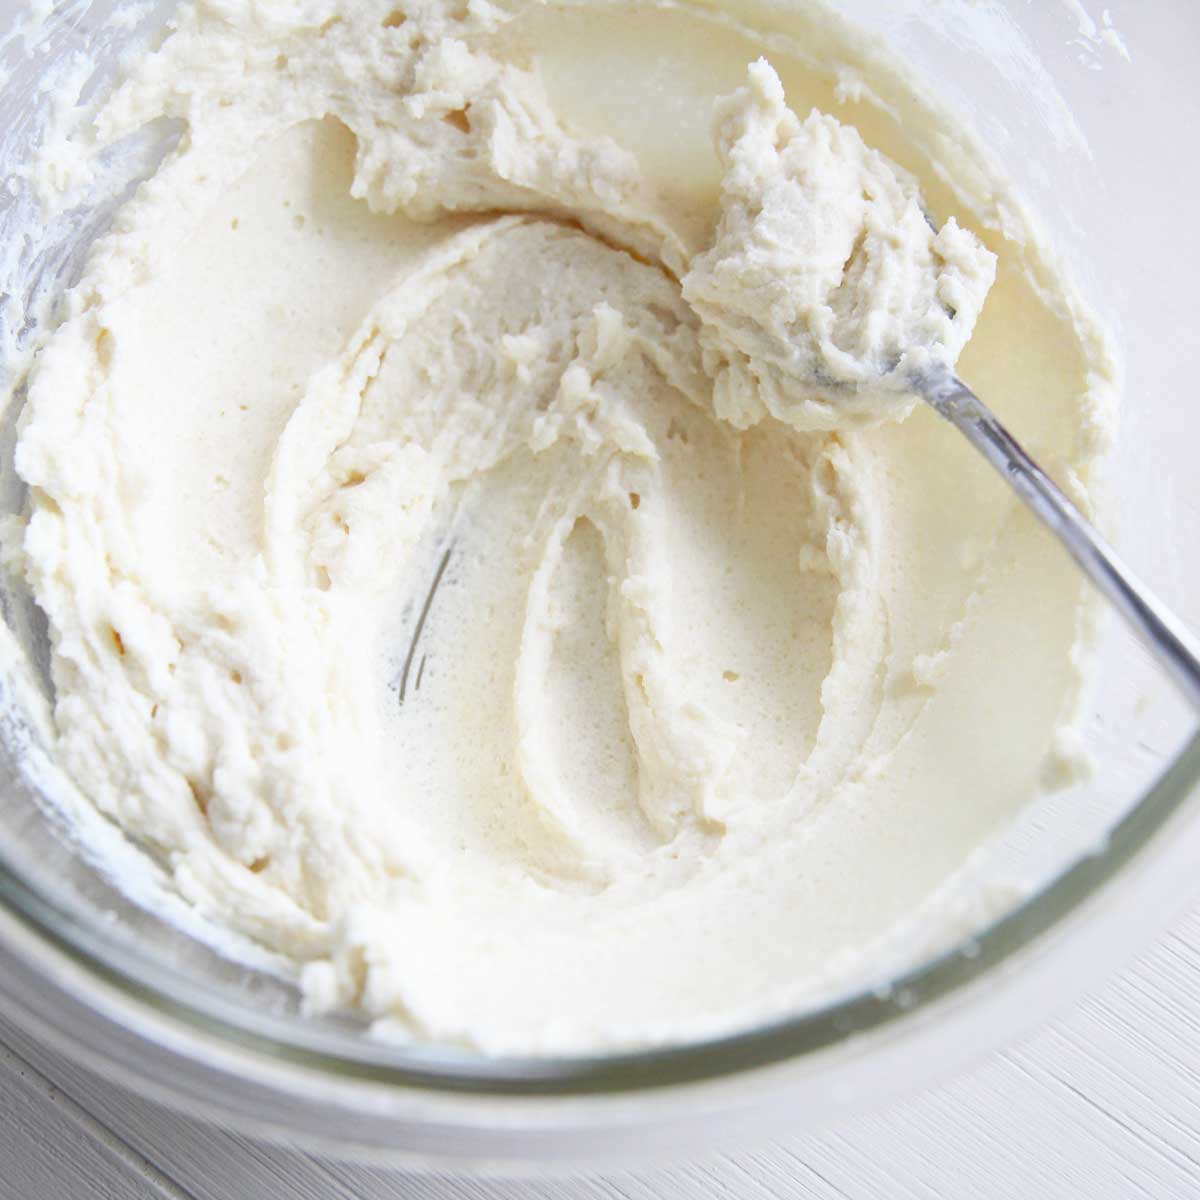 2 Ingredient Almond Yogurt Frosting (Healthy & Low Fat) - Simple Pineapple Glaze